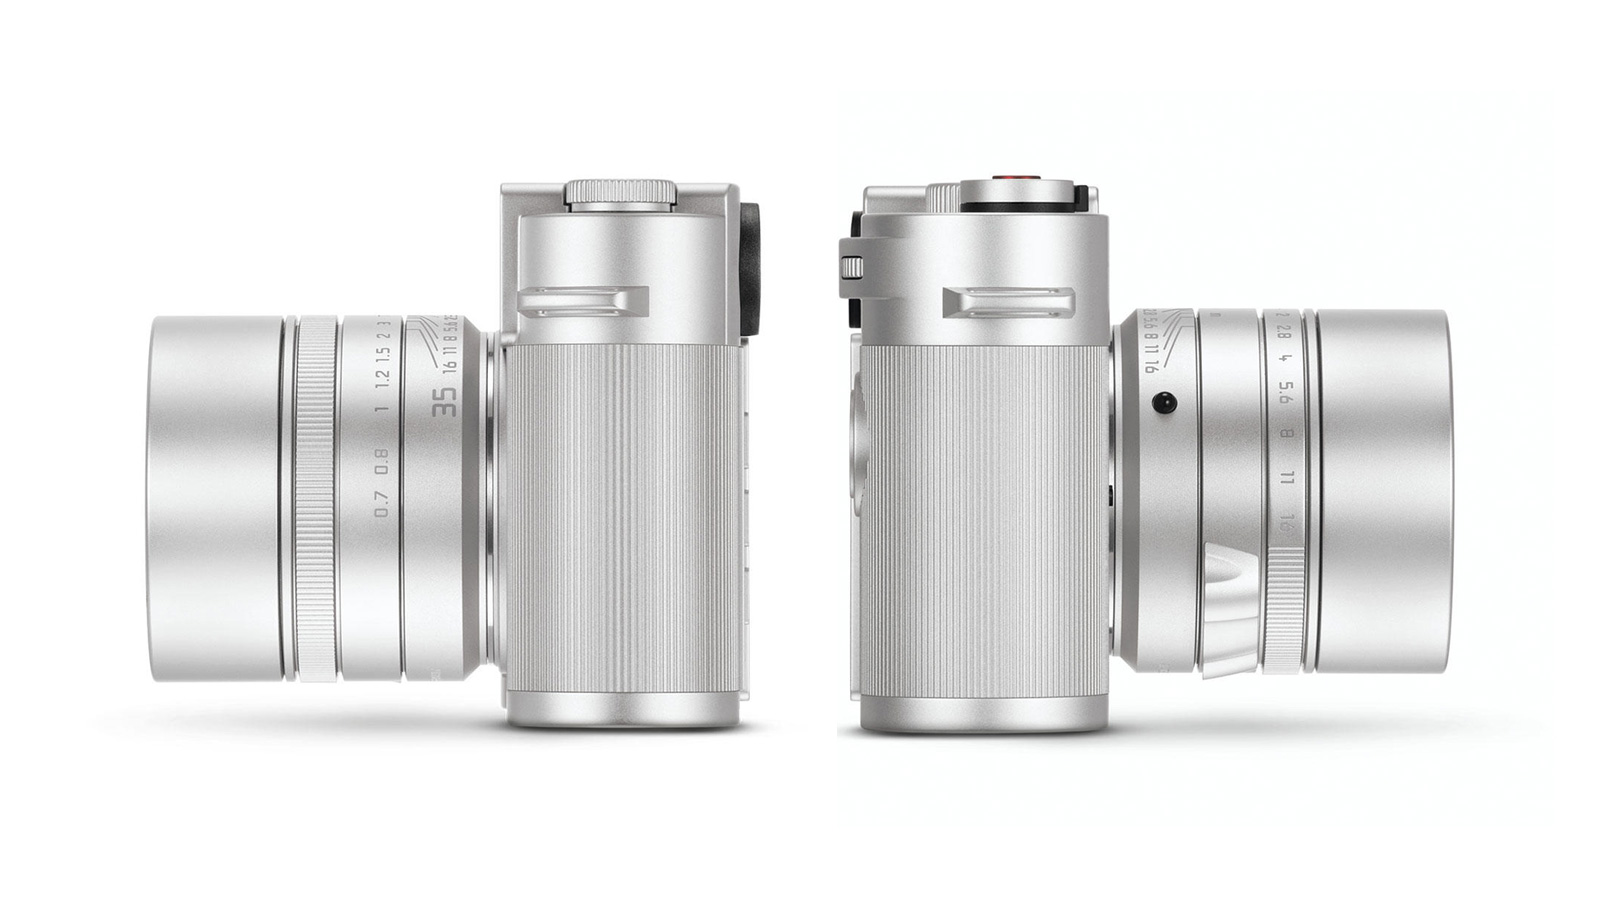 Leica's M10 Edition Zagato back-to-back